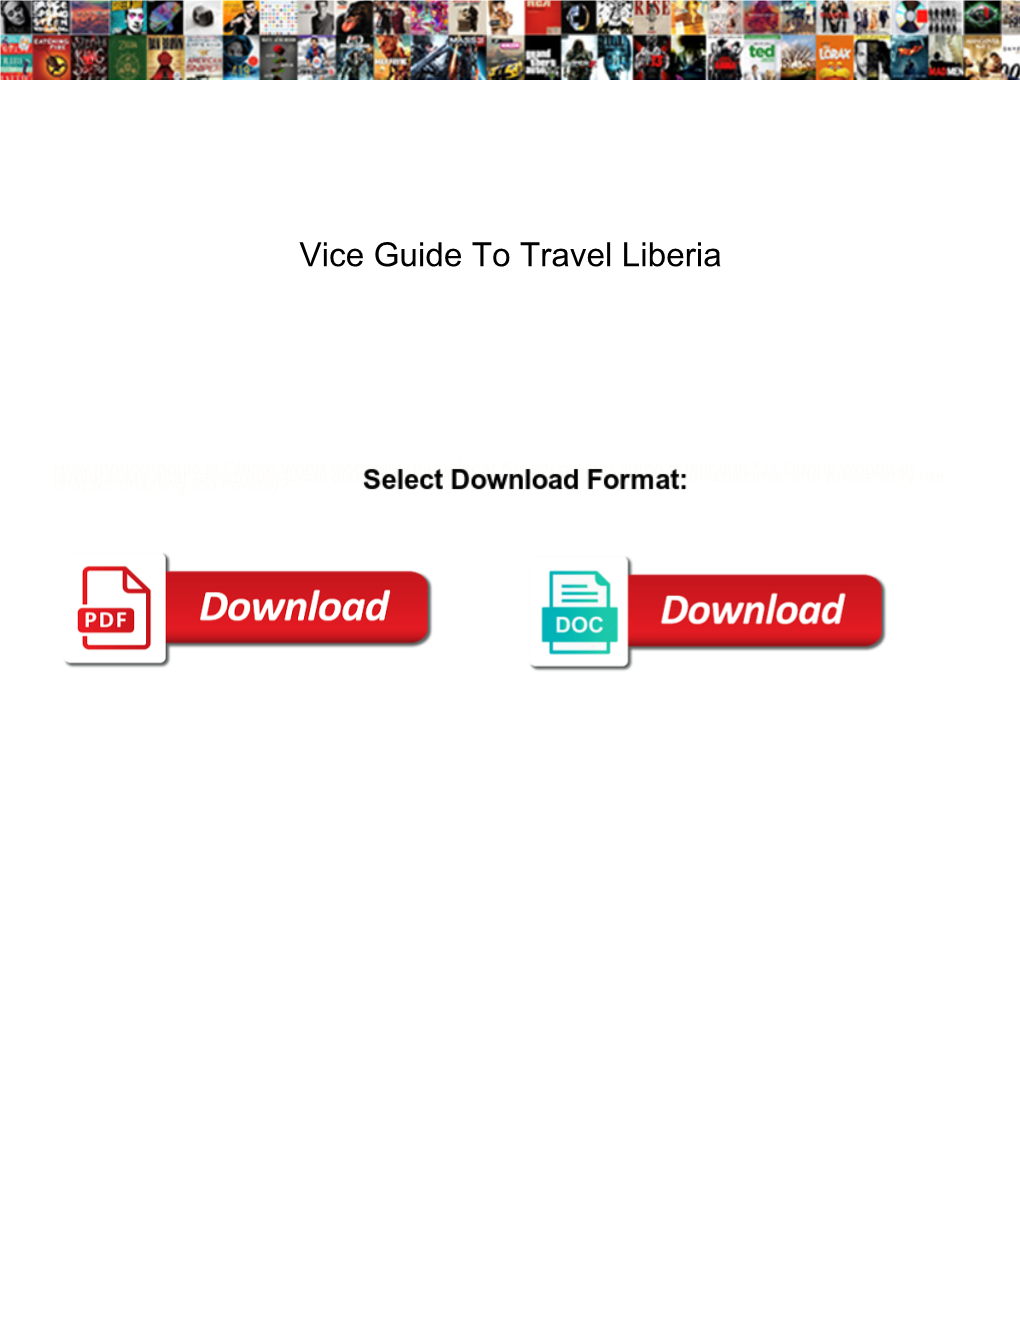 Vice Guide to Travel Liberia